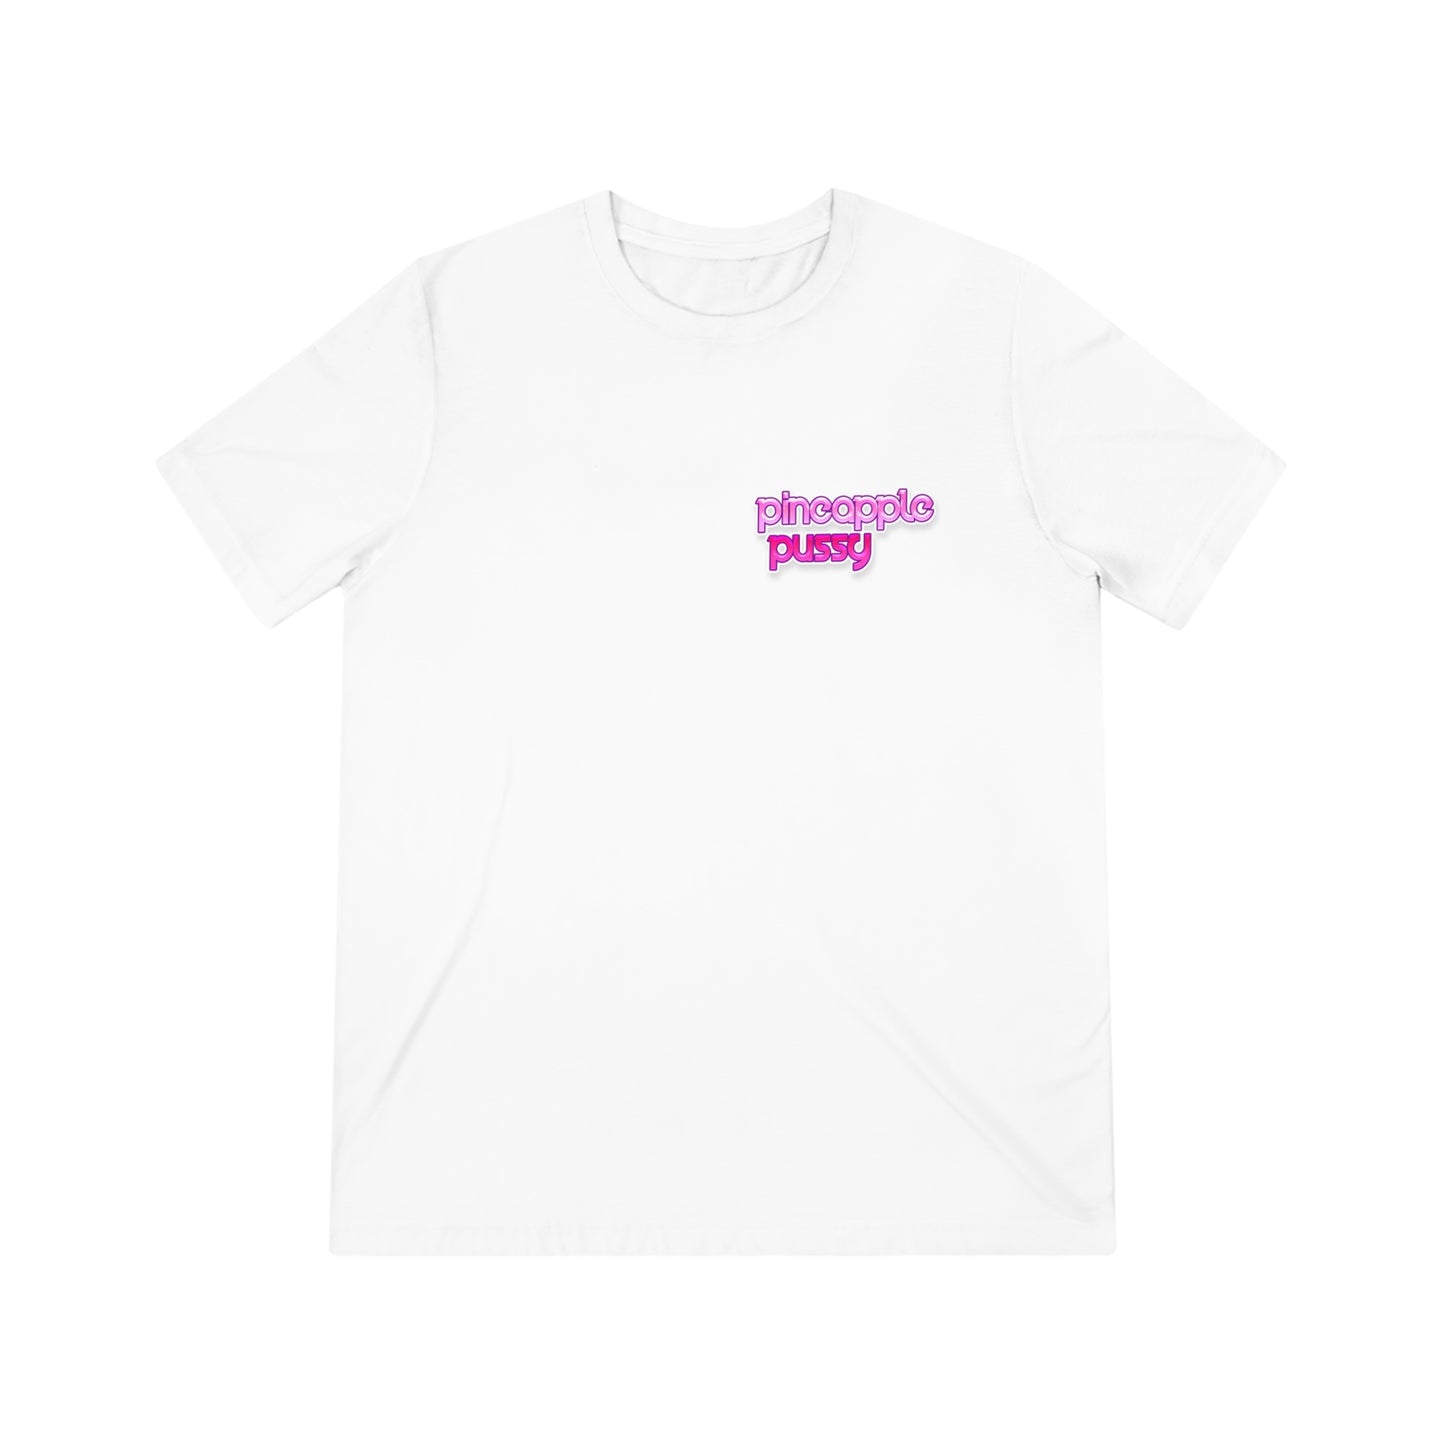 Pineapple Pussy - T-Shirt